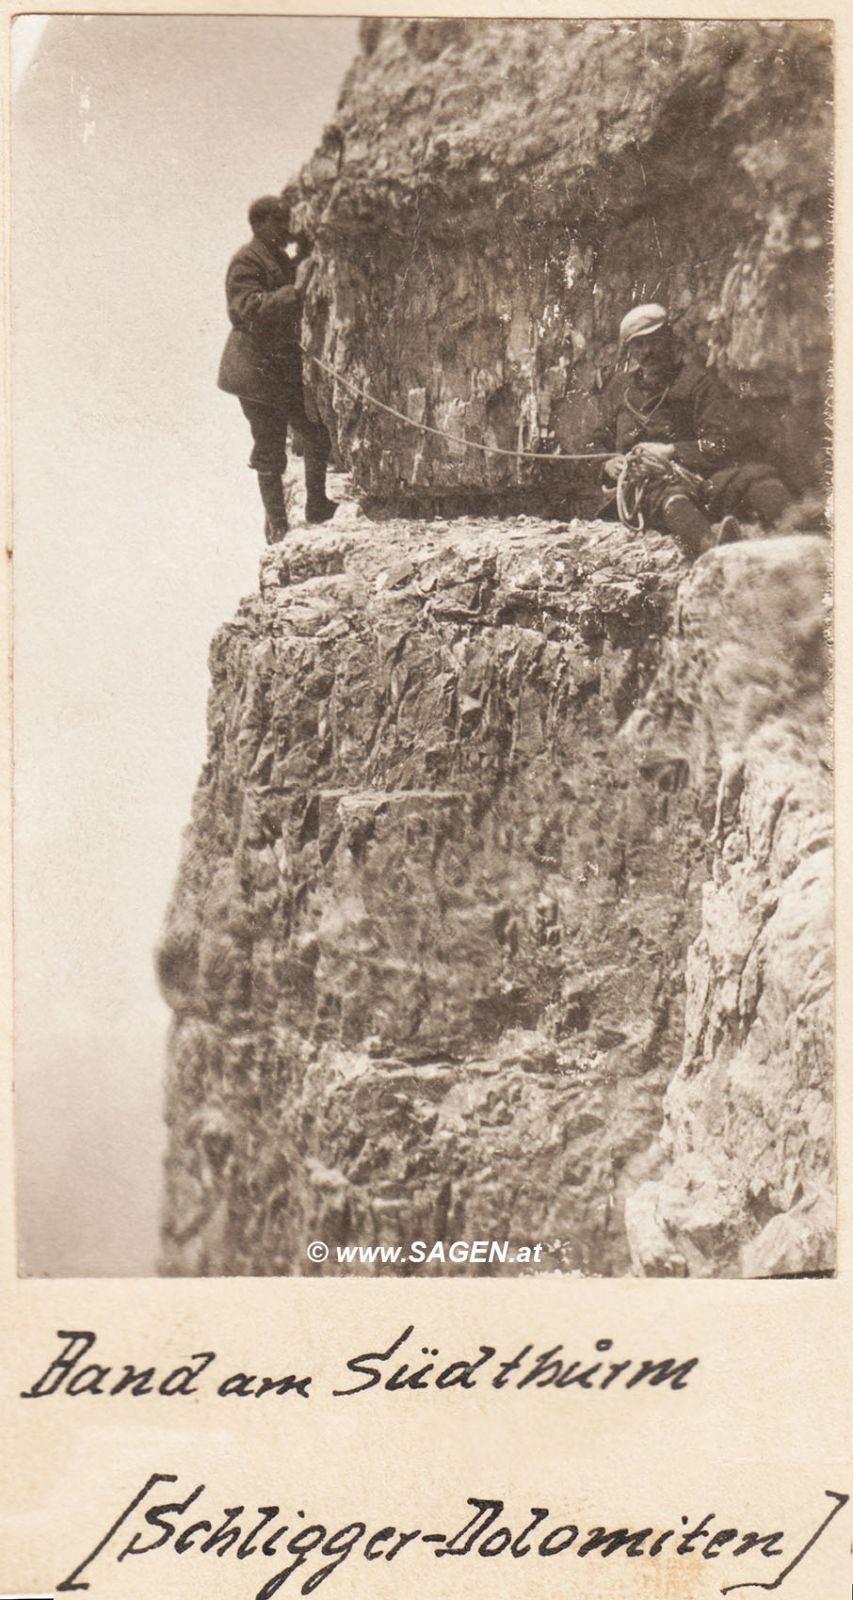 Band am Südturm, Schlicker Dolomien um 1920